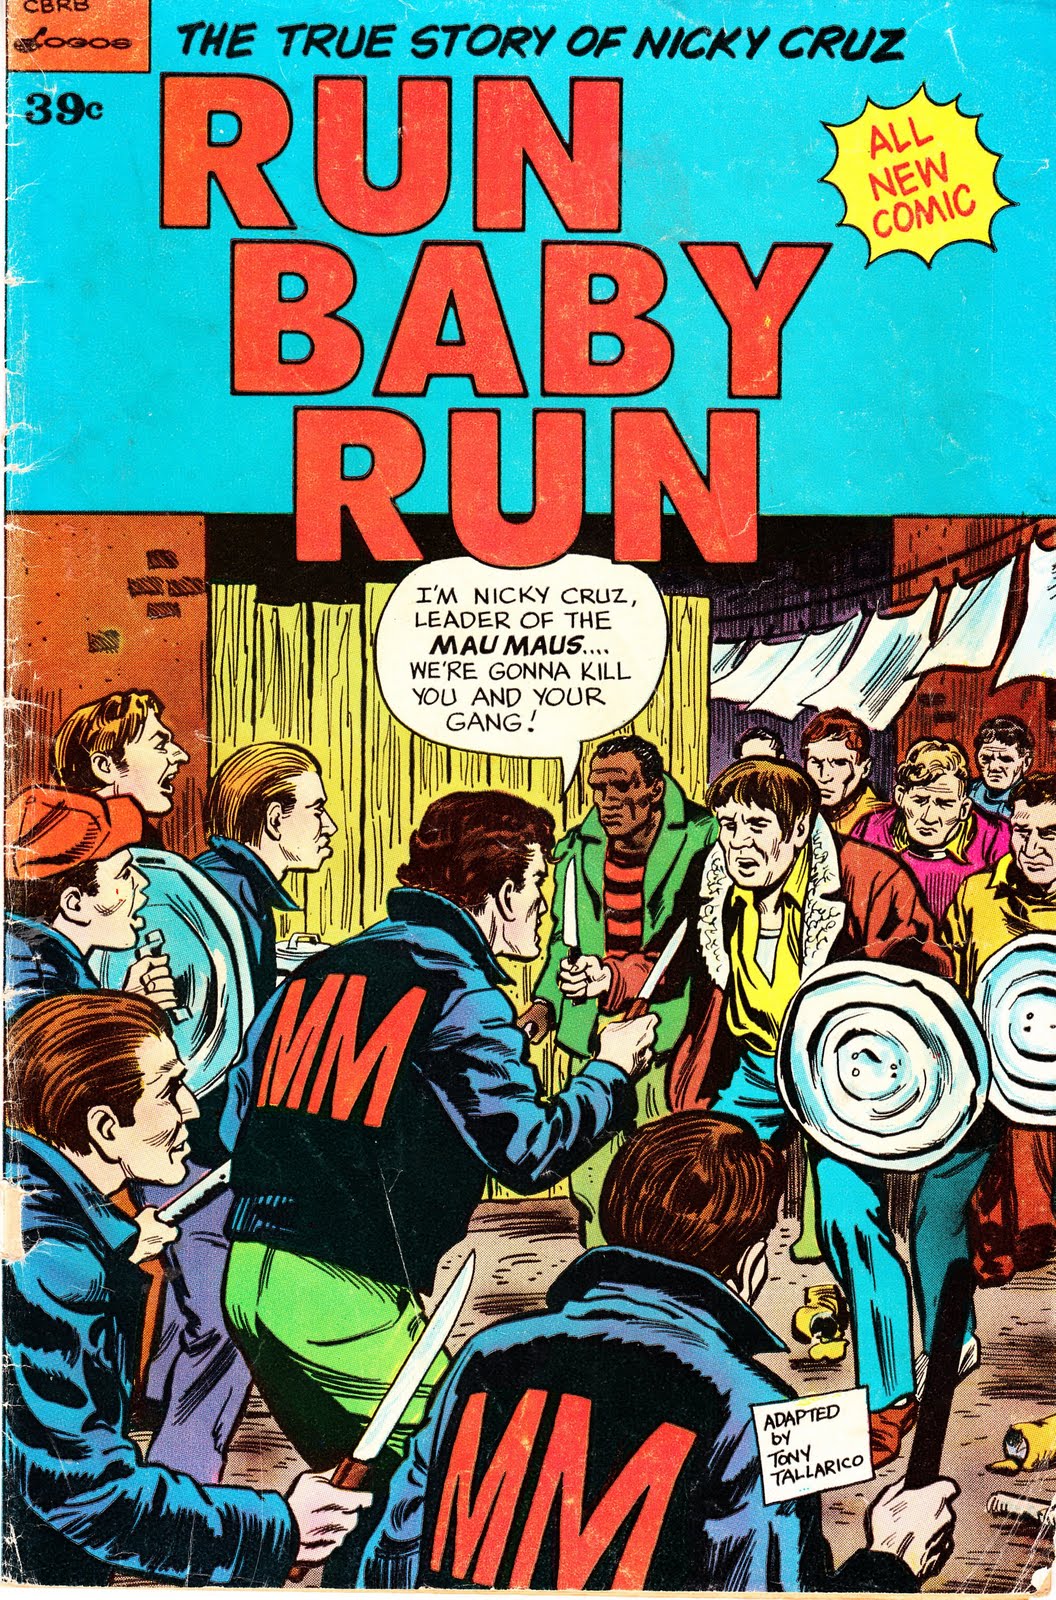 The Retro/Vintage Scan Emporium: Recently purchased vintage comic books